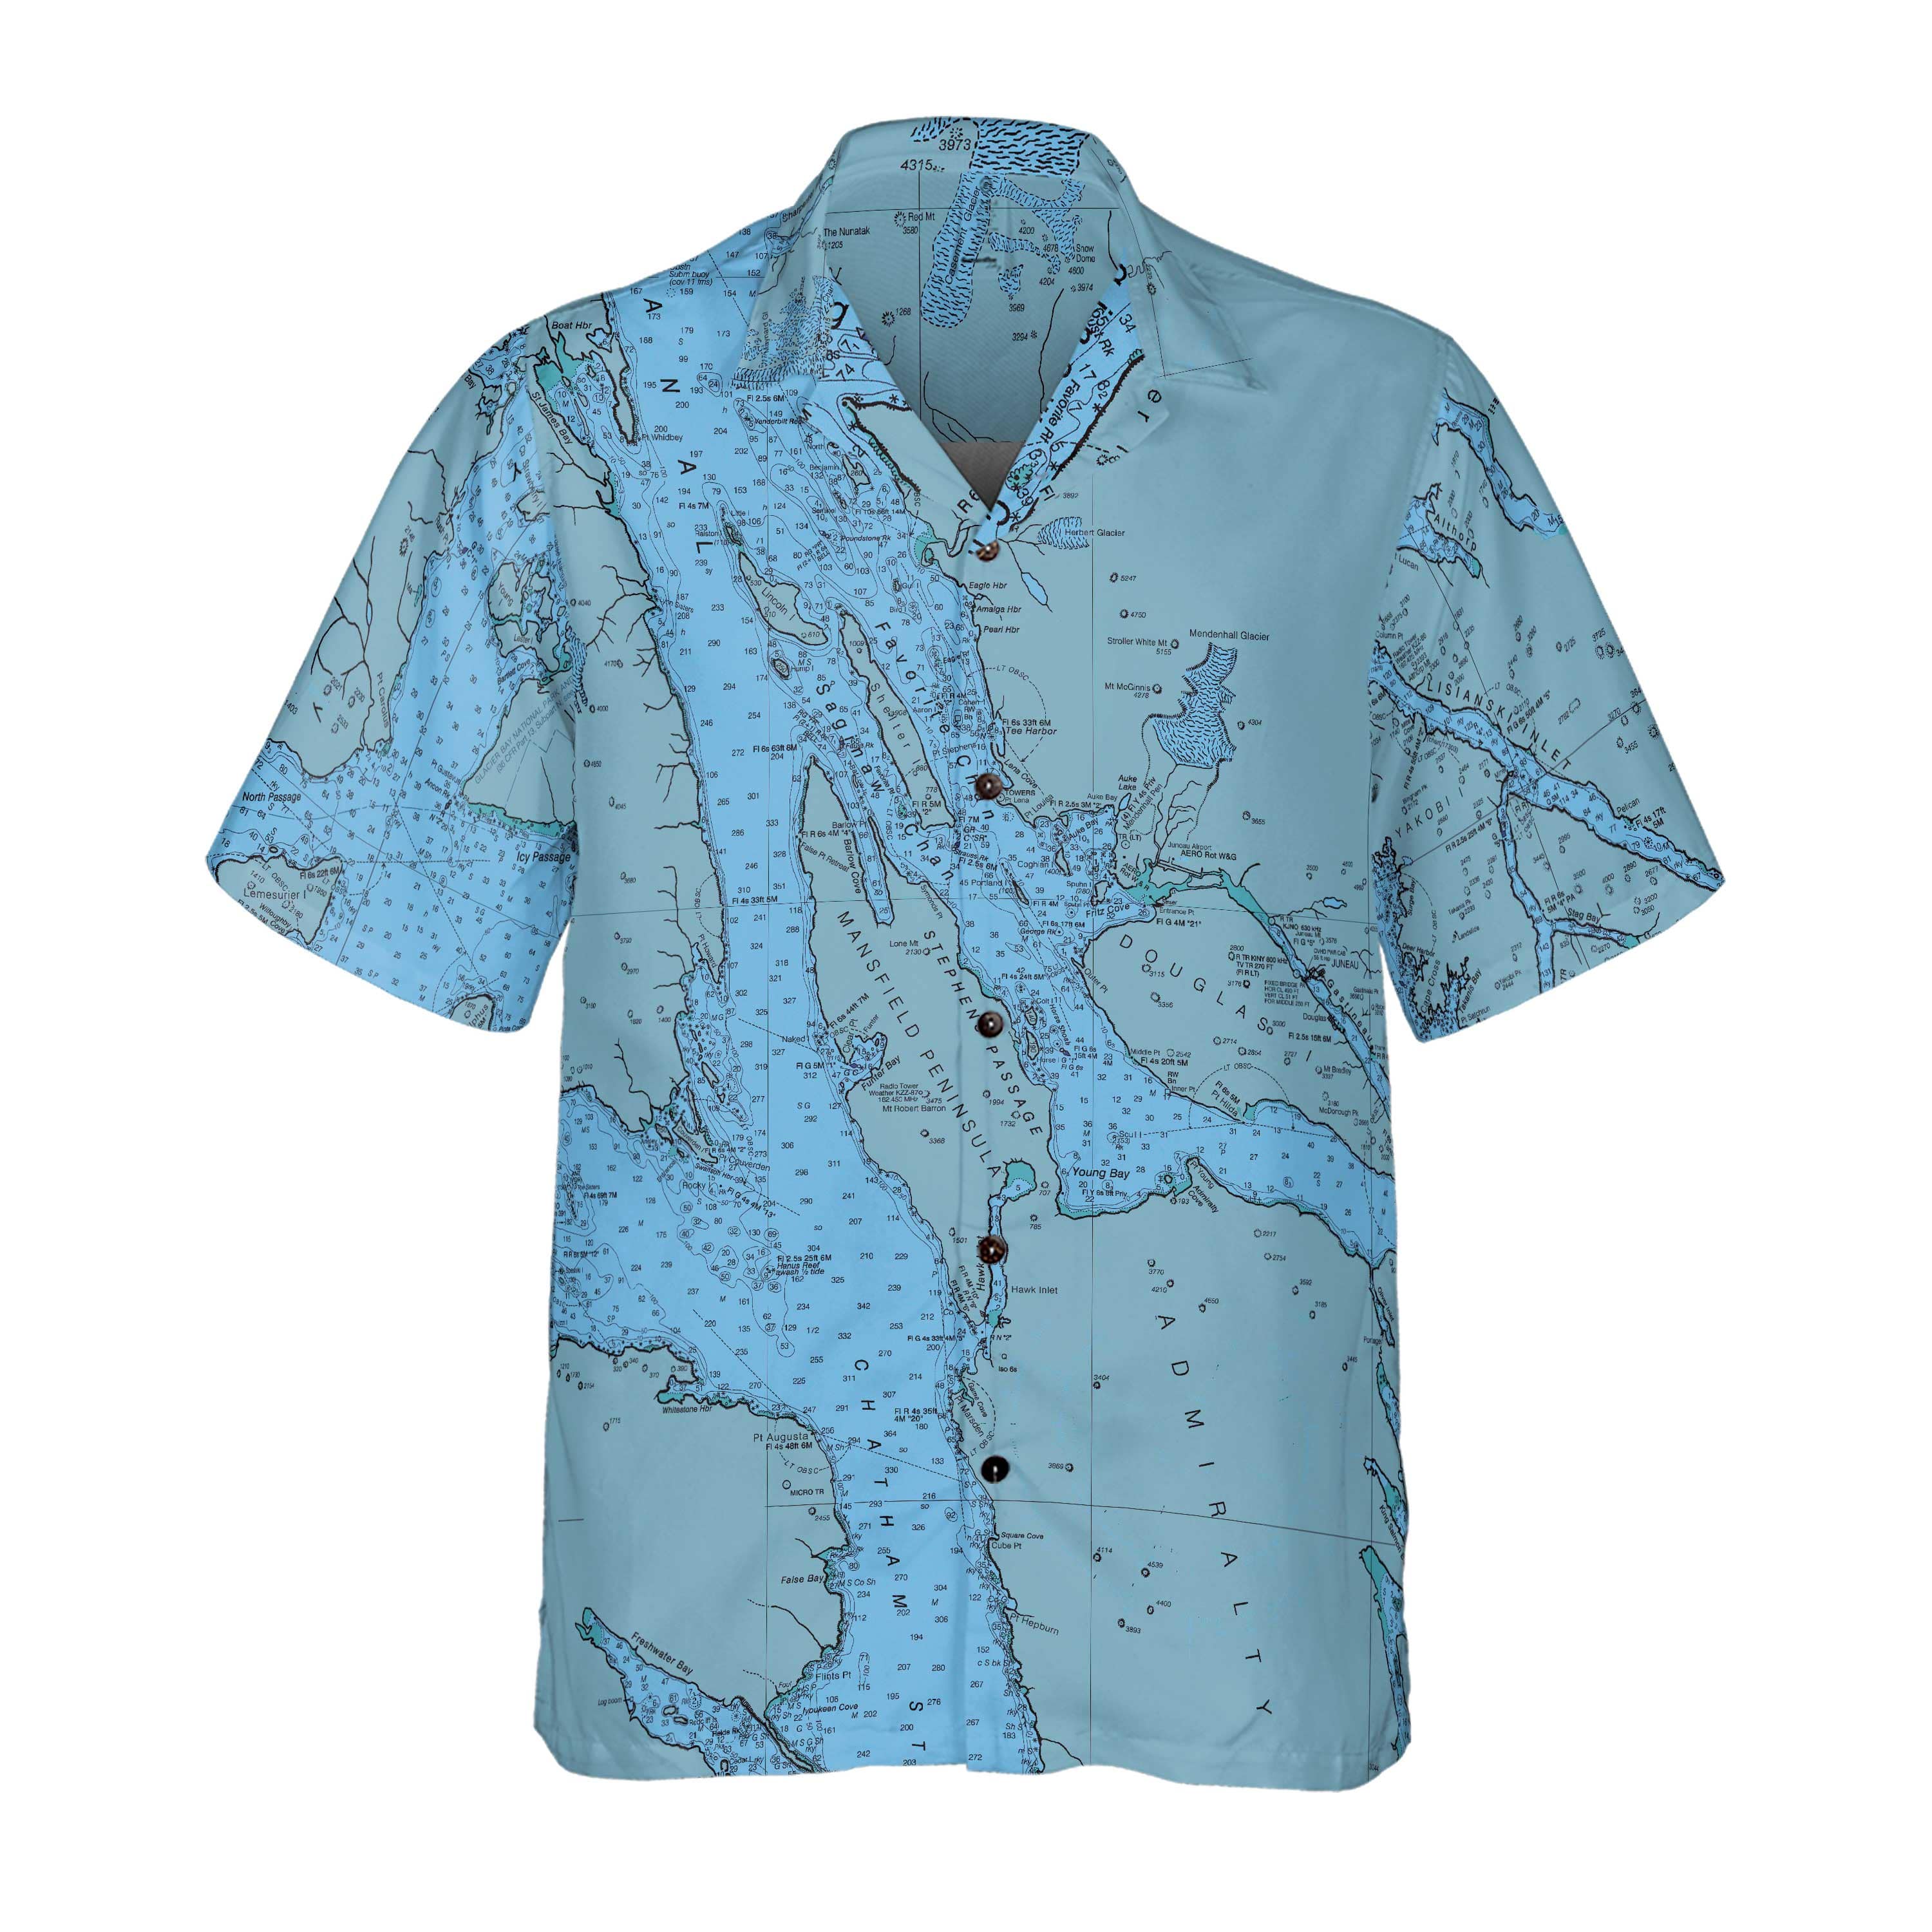 The Seafoam Green Juneau Mariner Coconut Button Camp Shirt